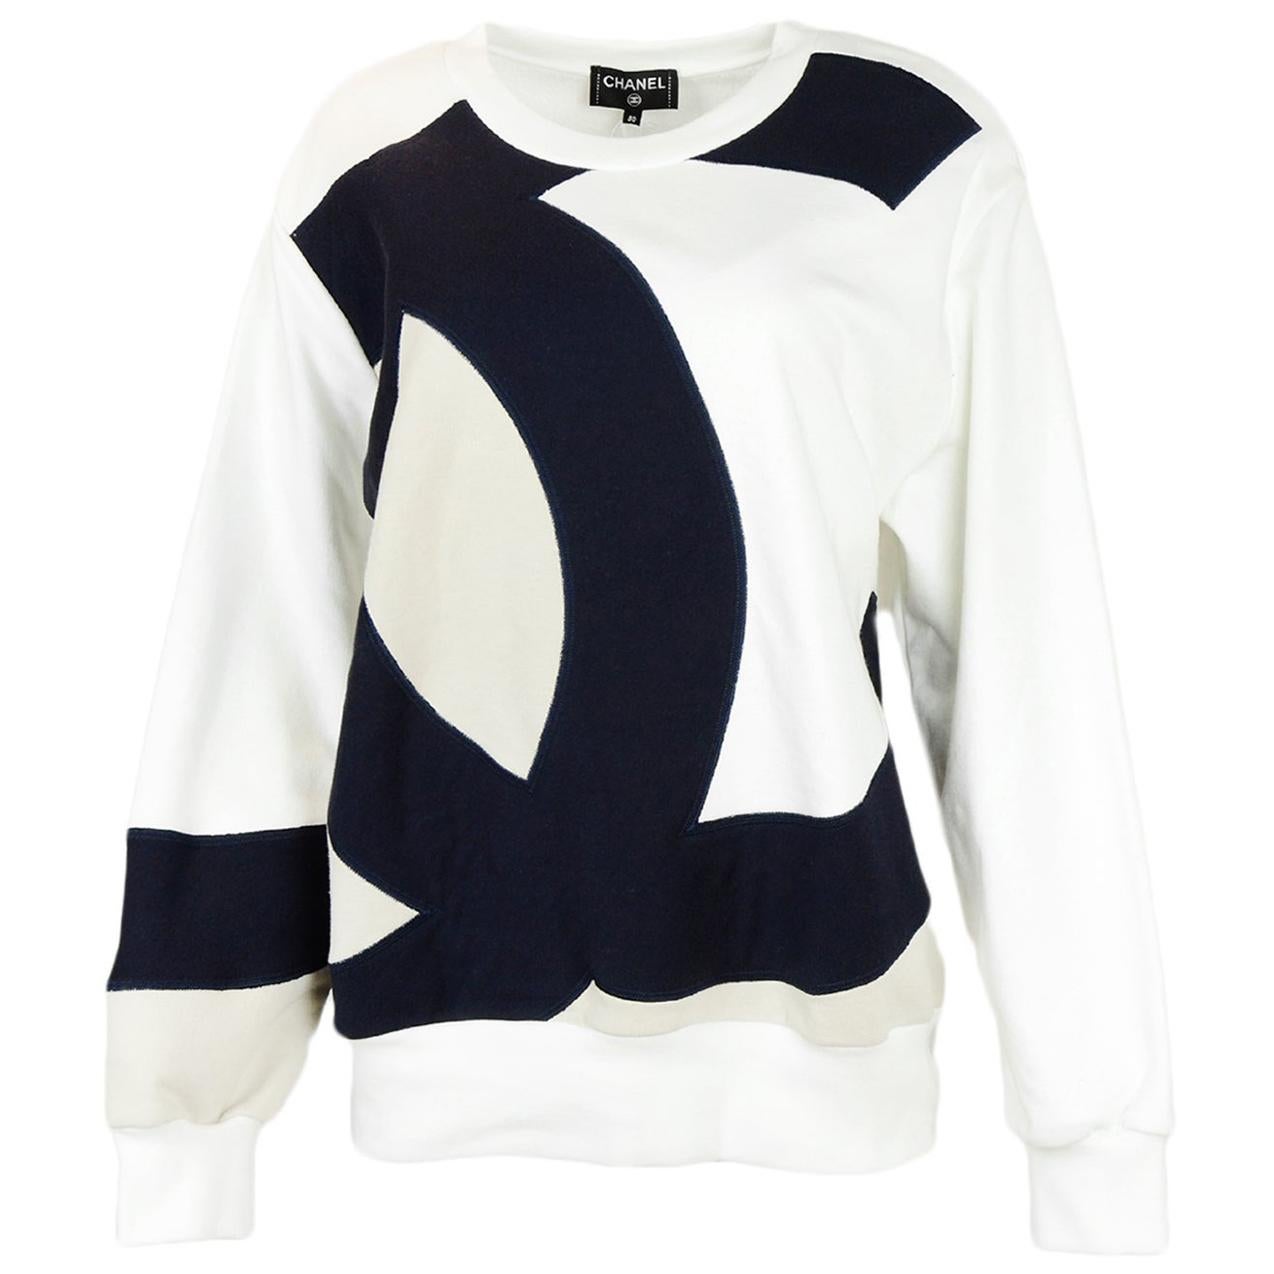 Chanel 2018 Black and White CC Colorblock Crewneck Sweater sz FR 50 rt. $2K+